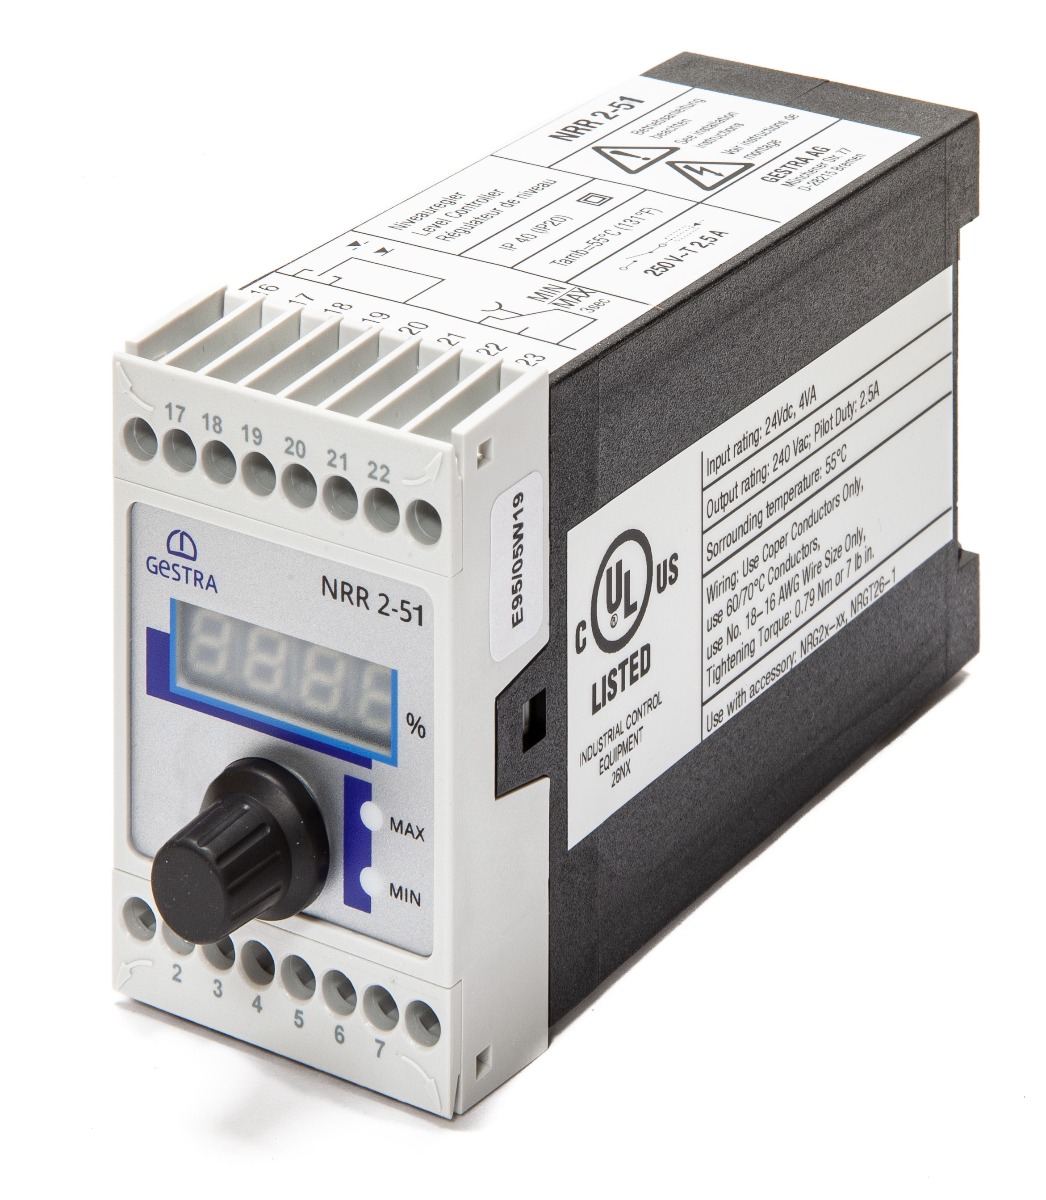 NRR2-51 Valve Control & Alarm Low & High Level Switch 24VDC